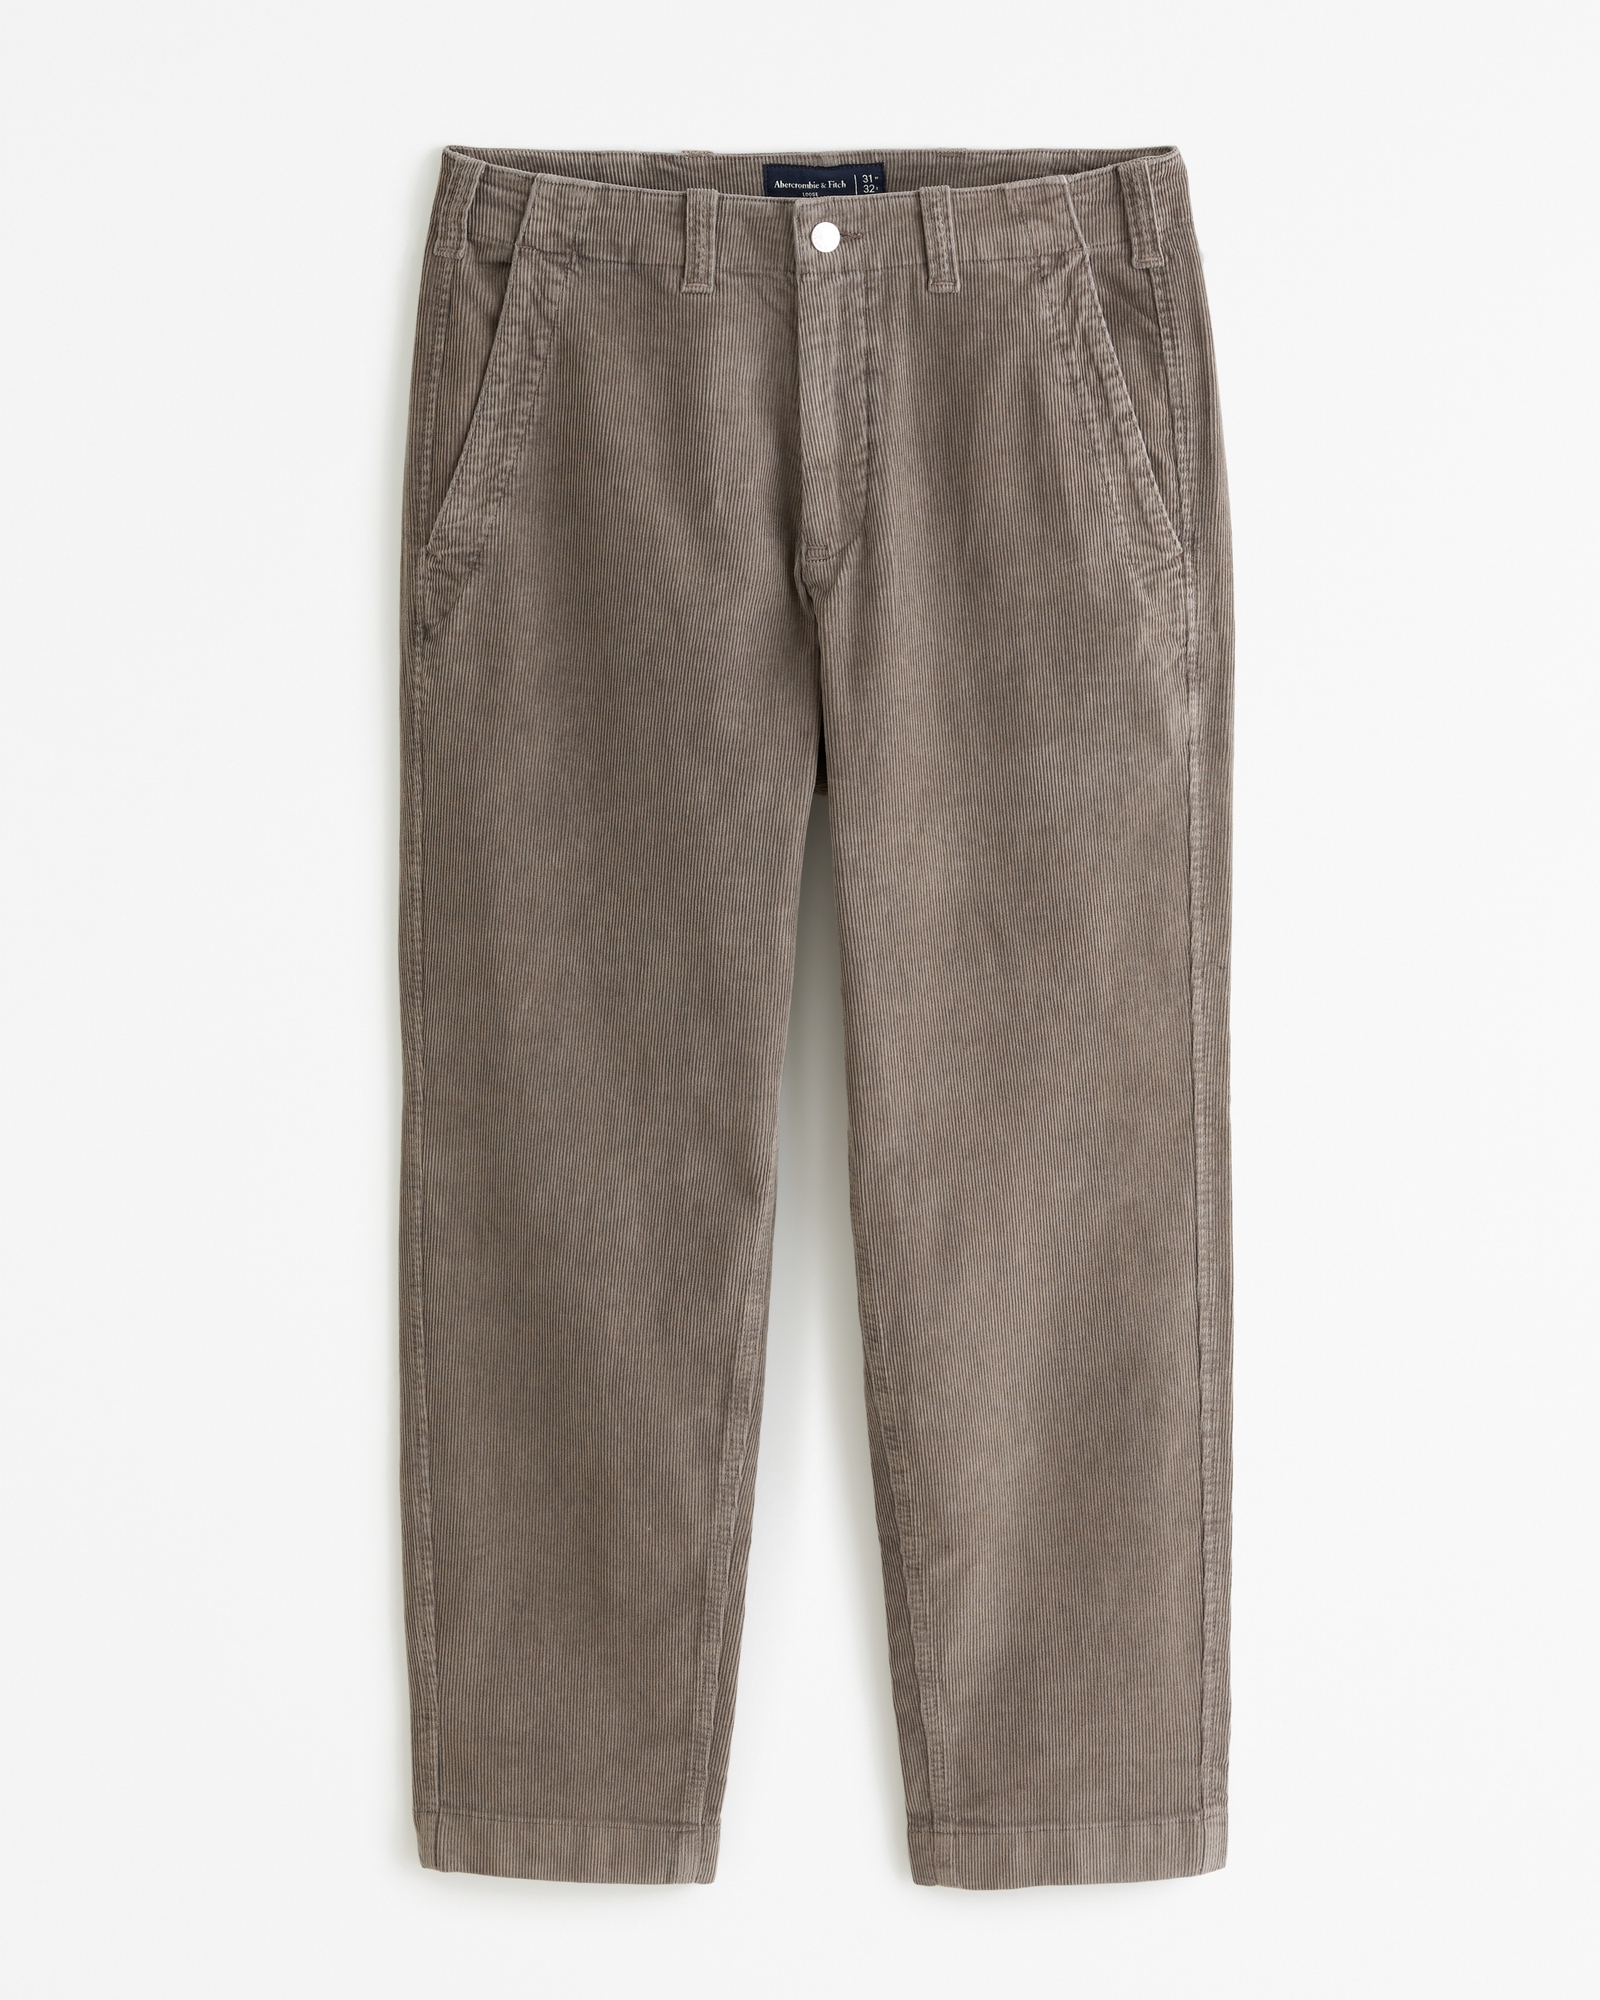 adidas Originals Piping Corduroy Pant Loose Fit in Brown for Men